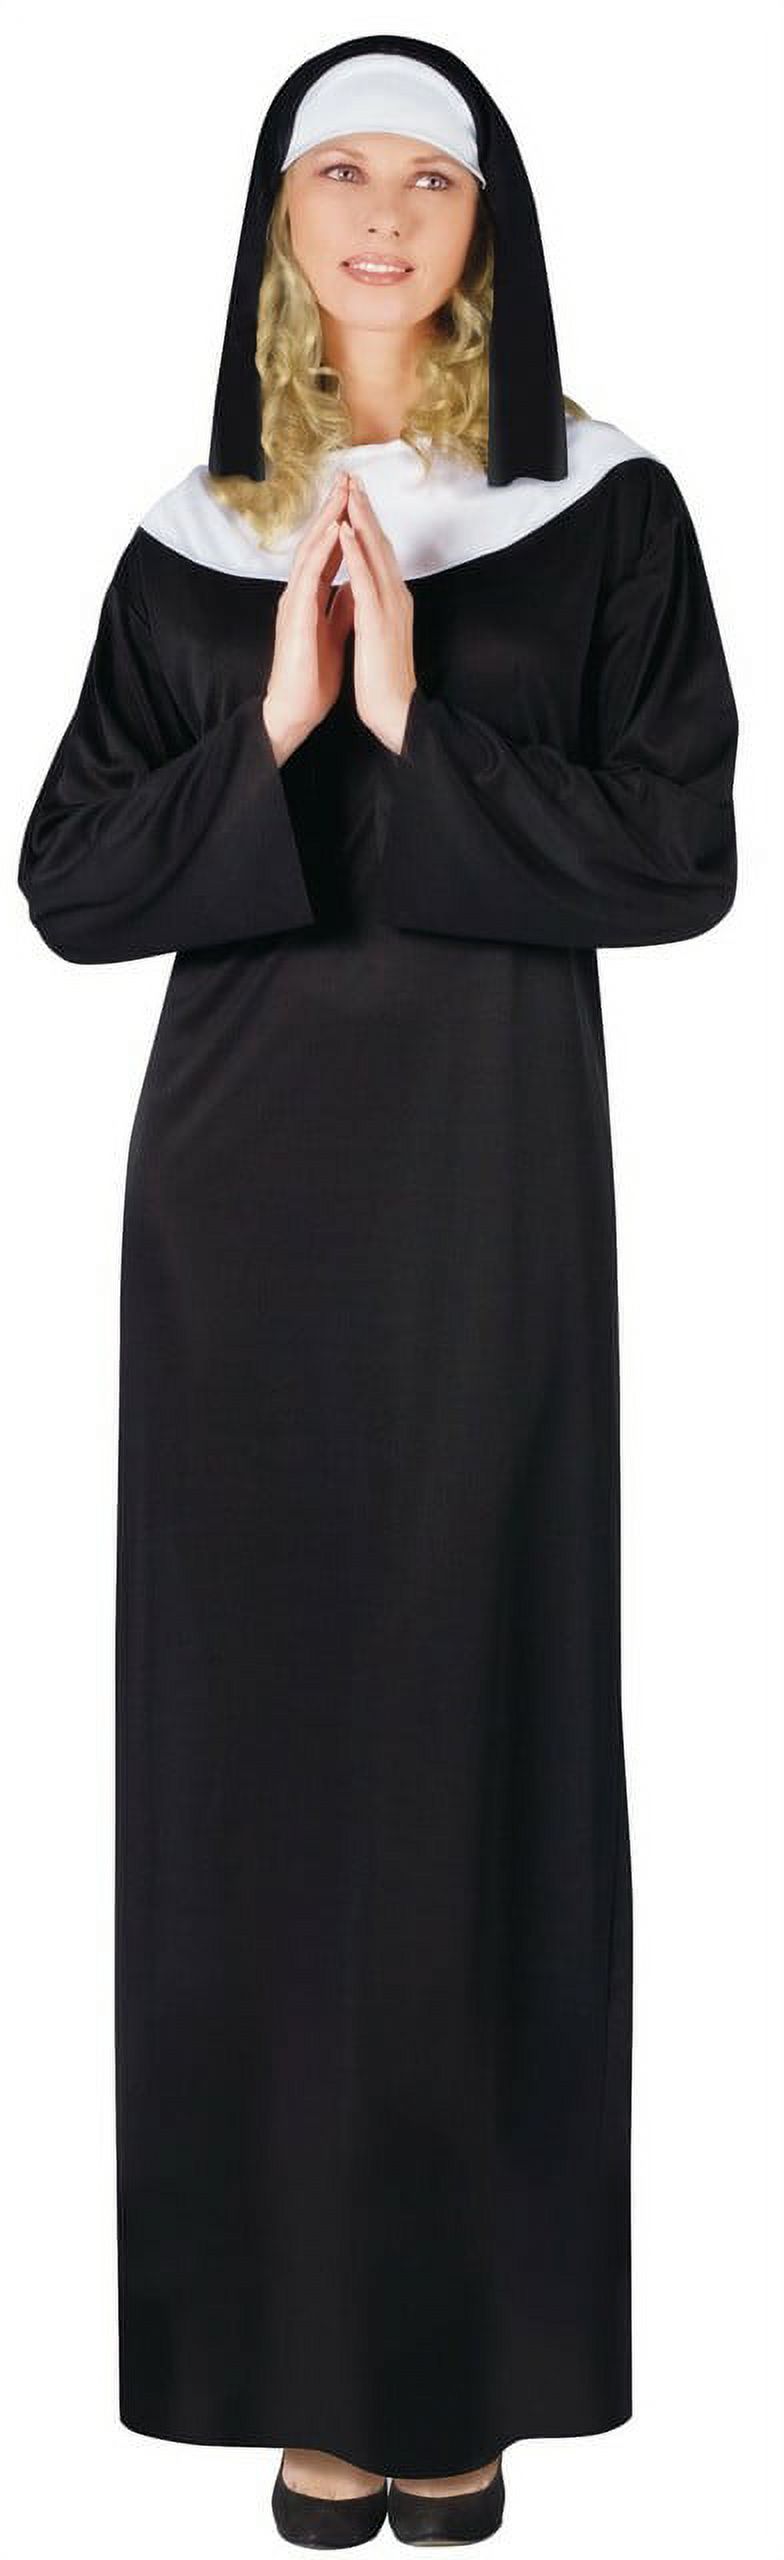 Nun Costume - image 2 of 2